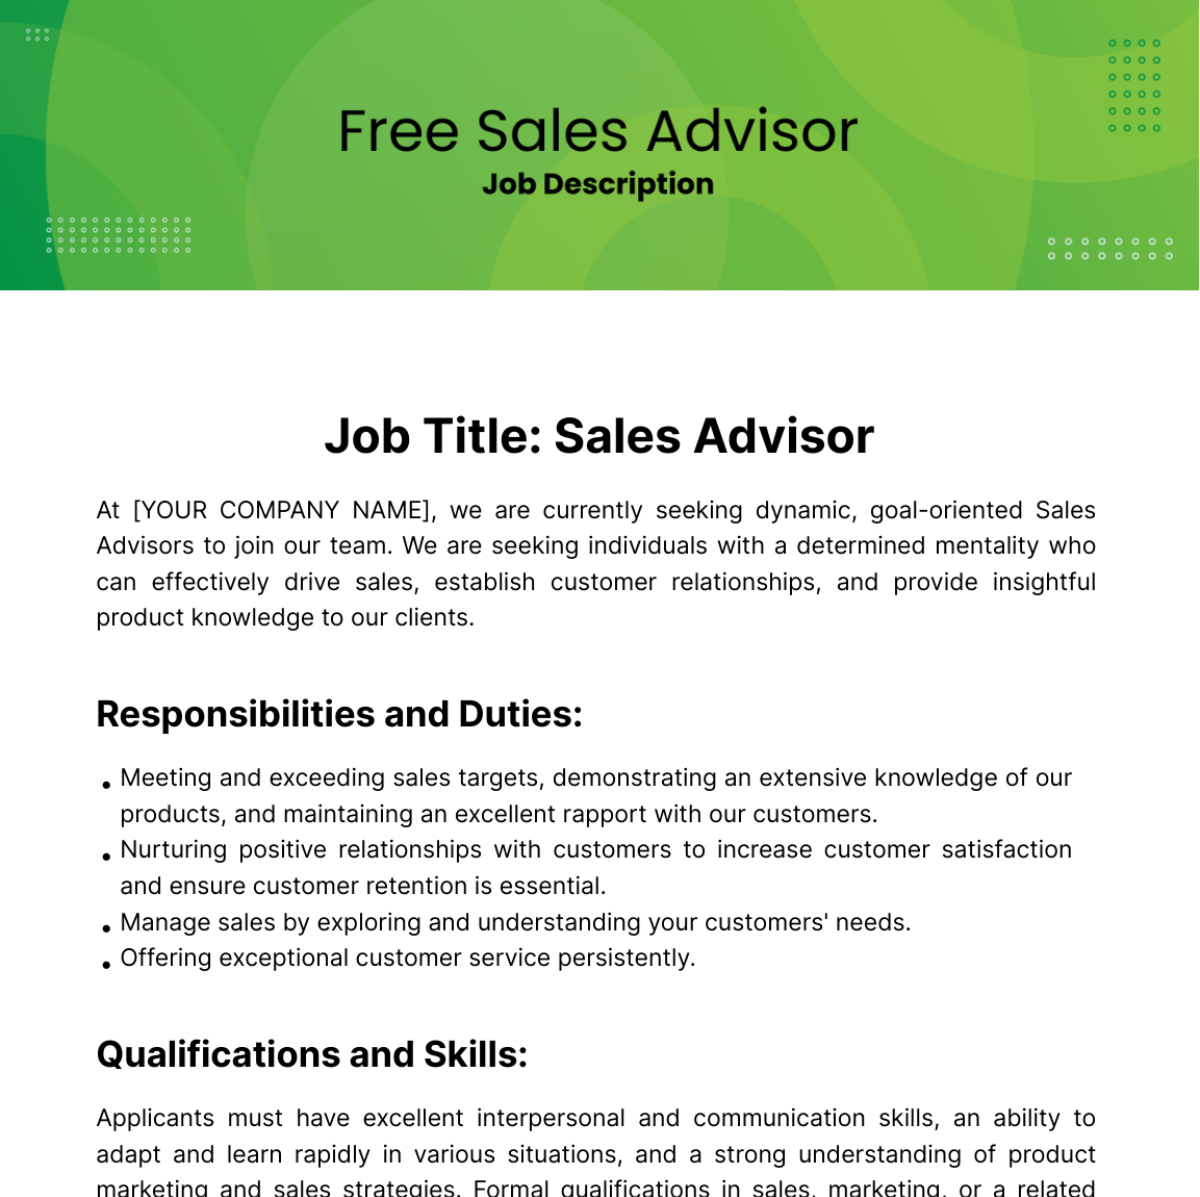 Free Sales Advisor Job Description Template